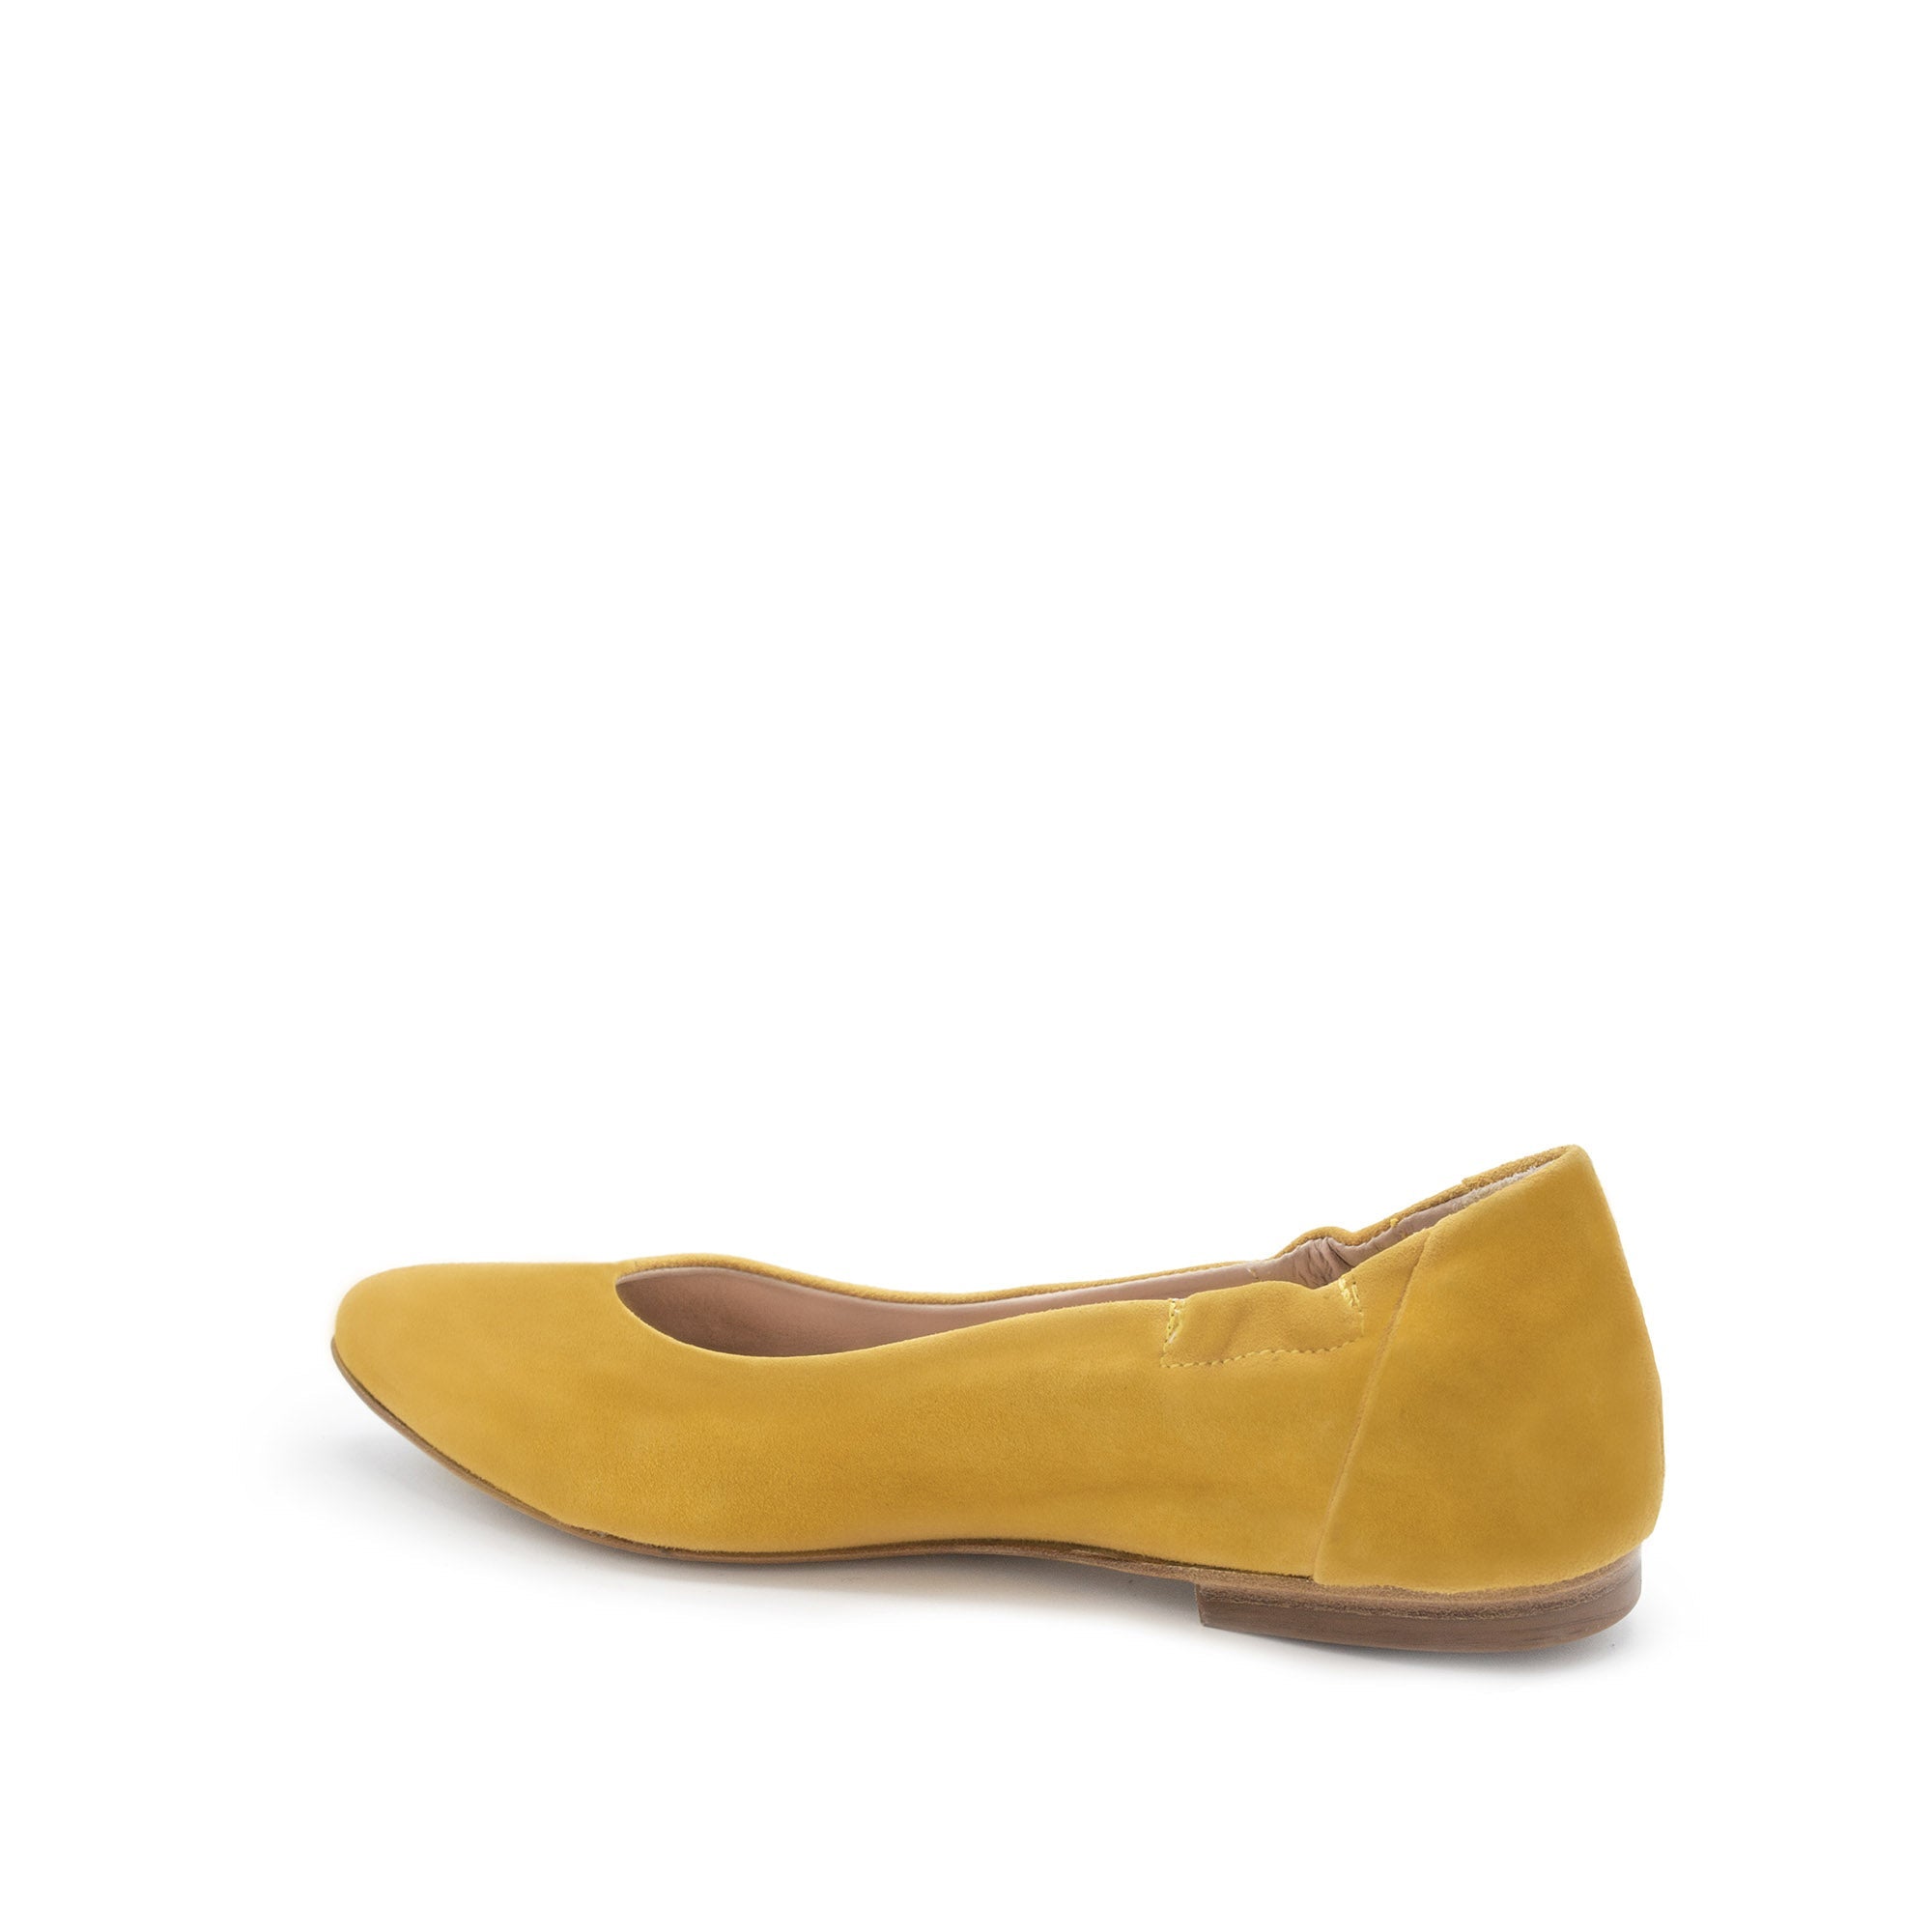 Mara Flats | Women’s Ballet Flats | Italian Suede Shoes - Italeau Nuova